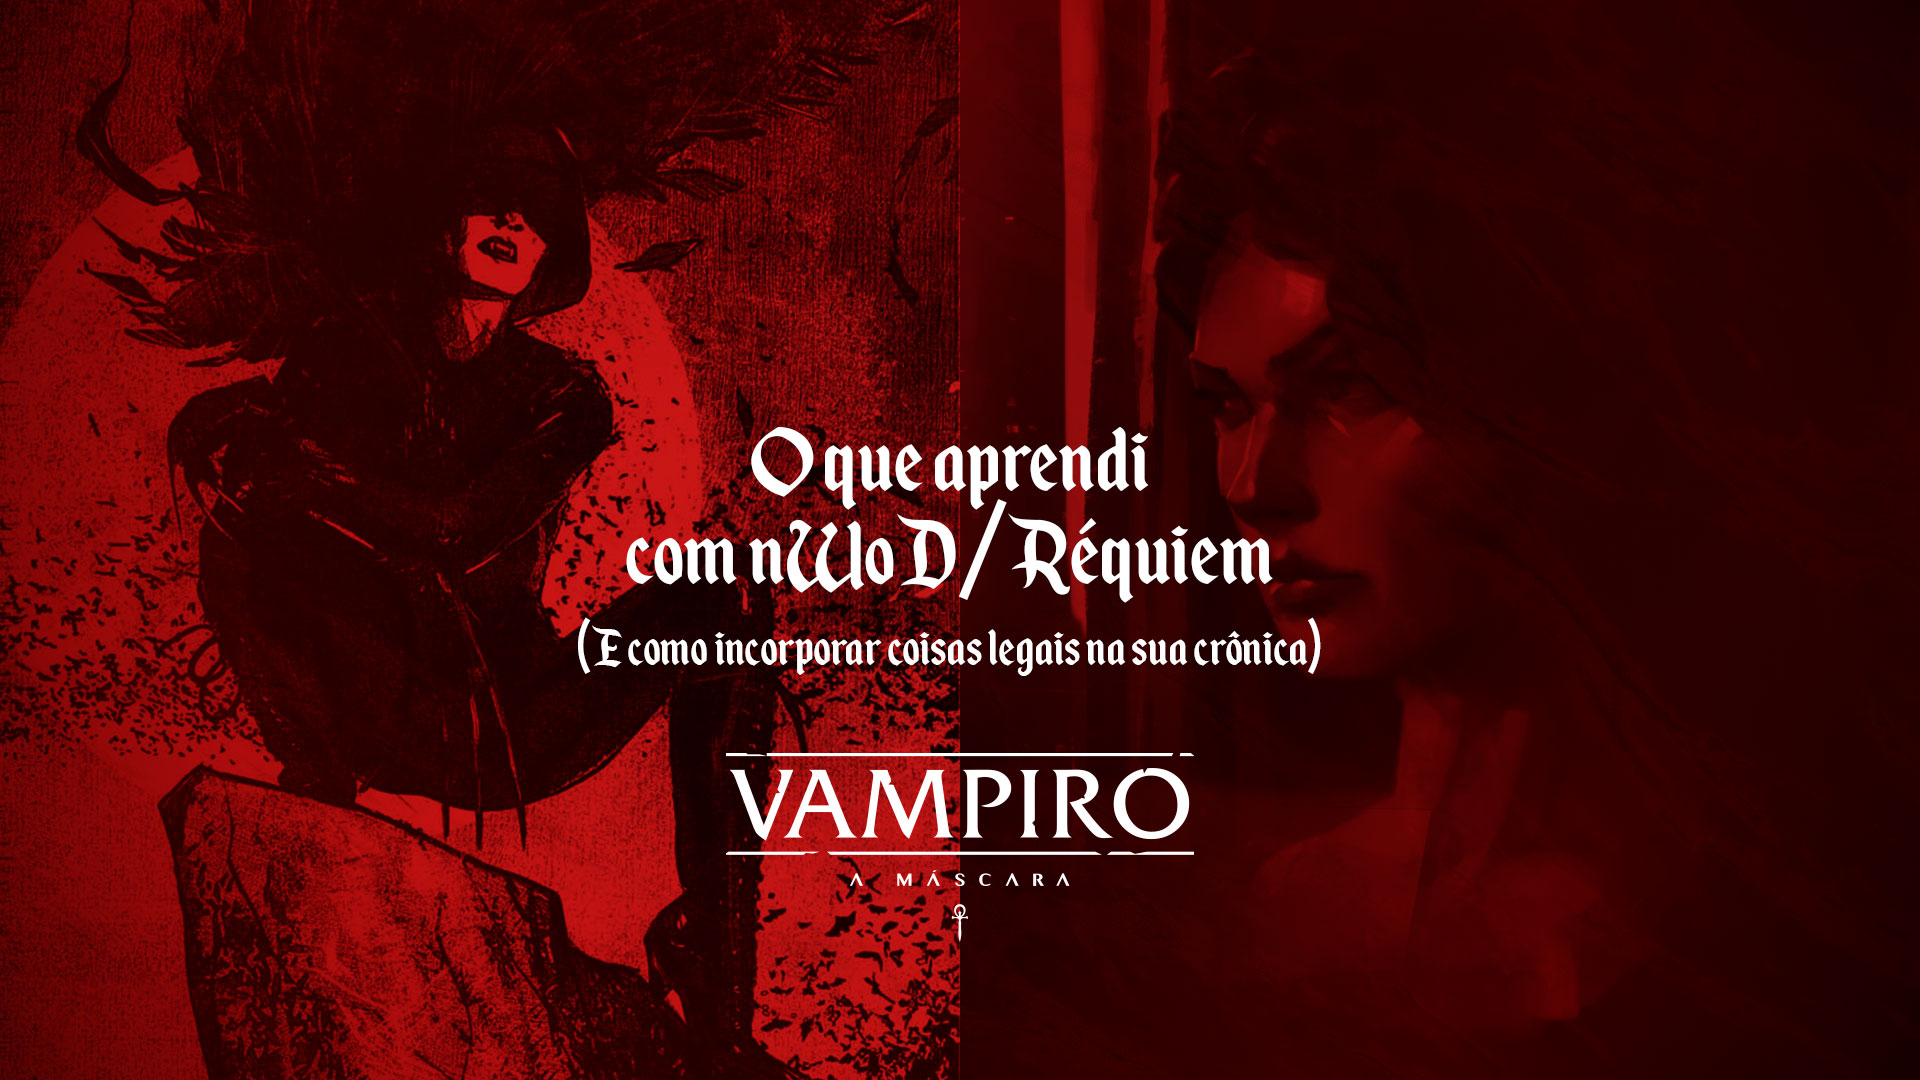 Vampire The Masquerade Bloodlines (PC) - Detonado - Parte 1 (PT-BR) 